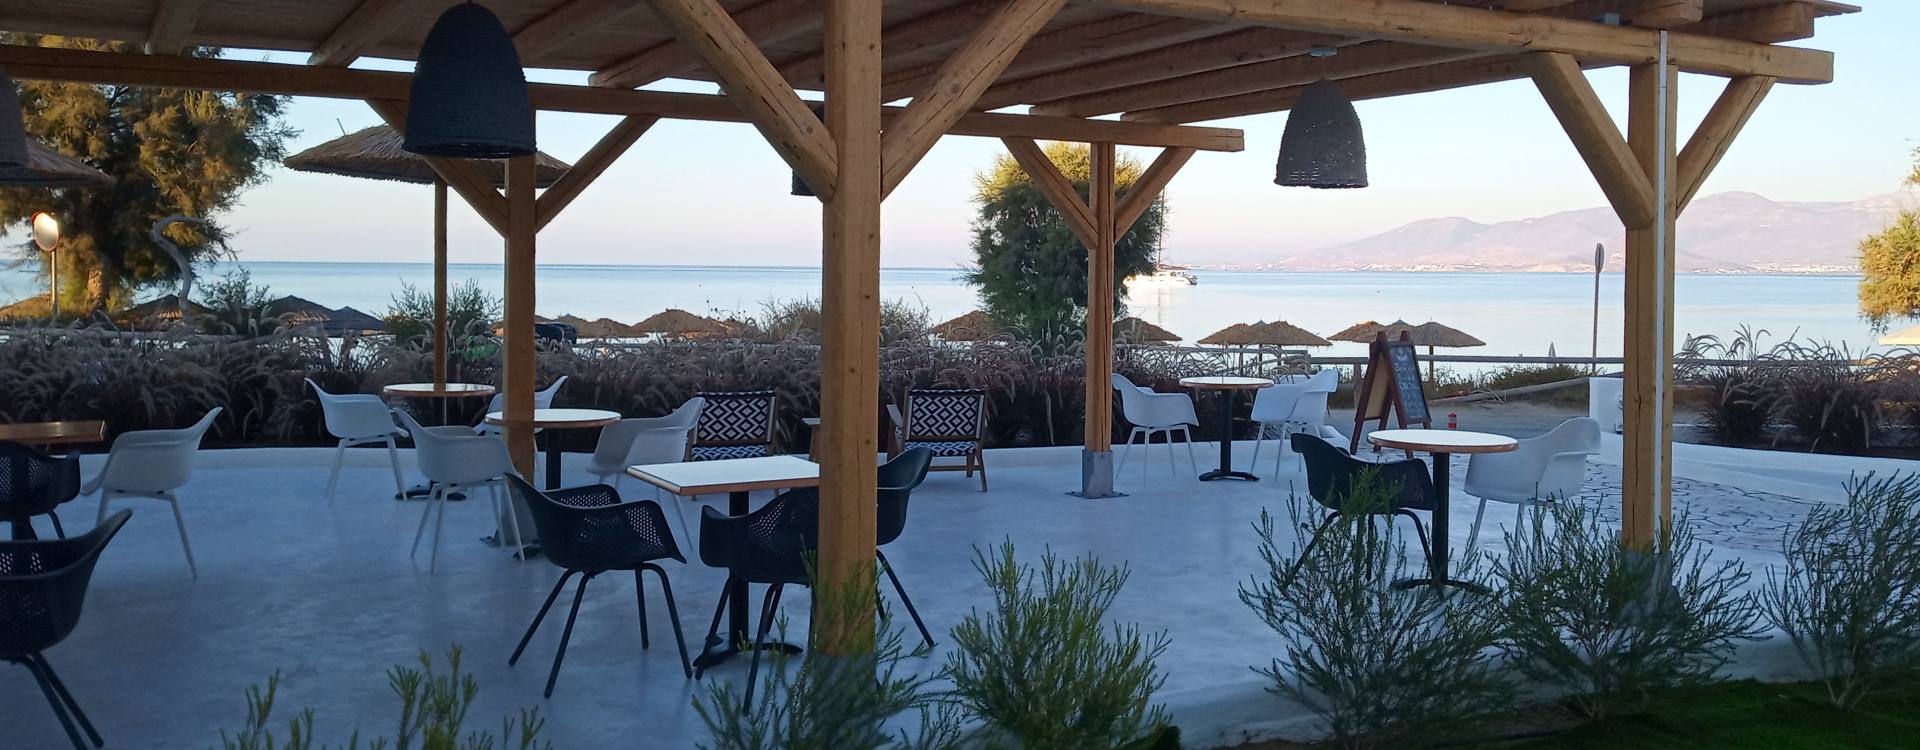 Fanis Hotel in Naxos